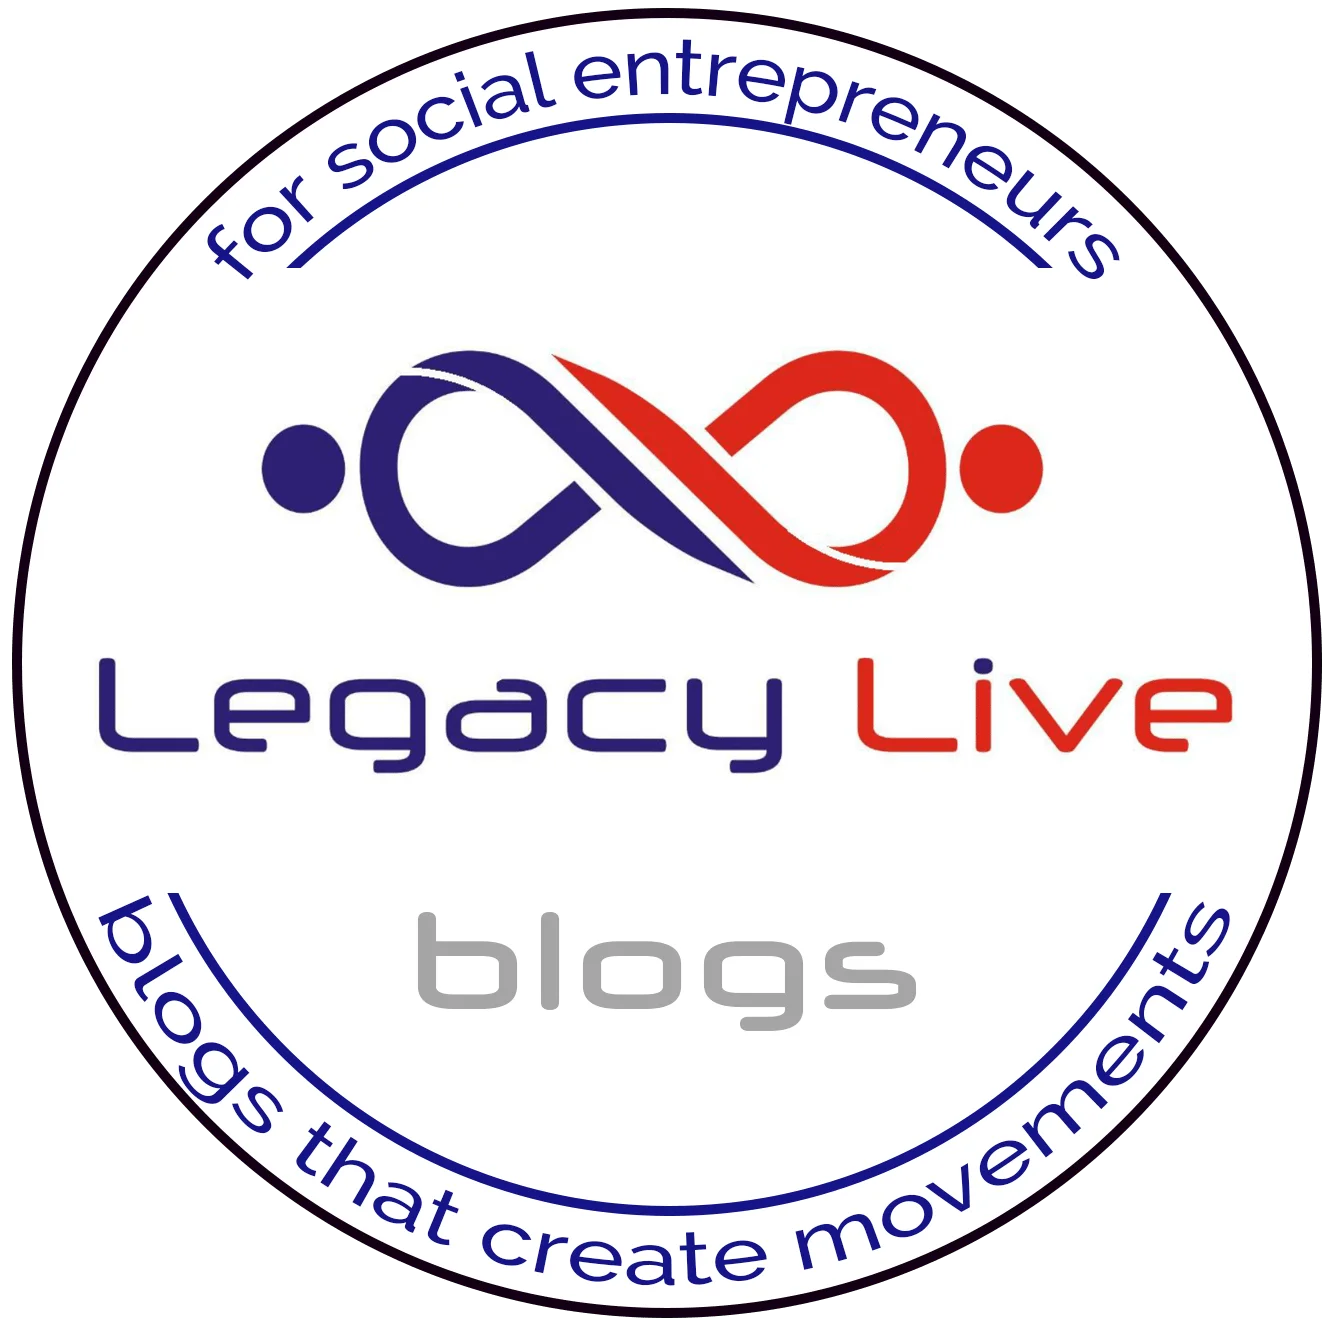 Legacy Live Blogs Logo: Blogs that create movements. For Social Entrepreneurs